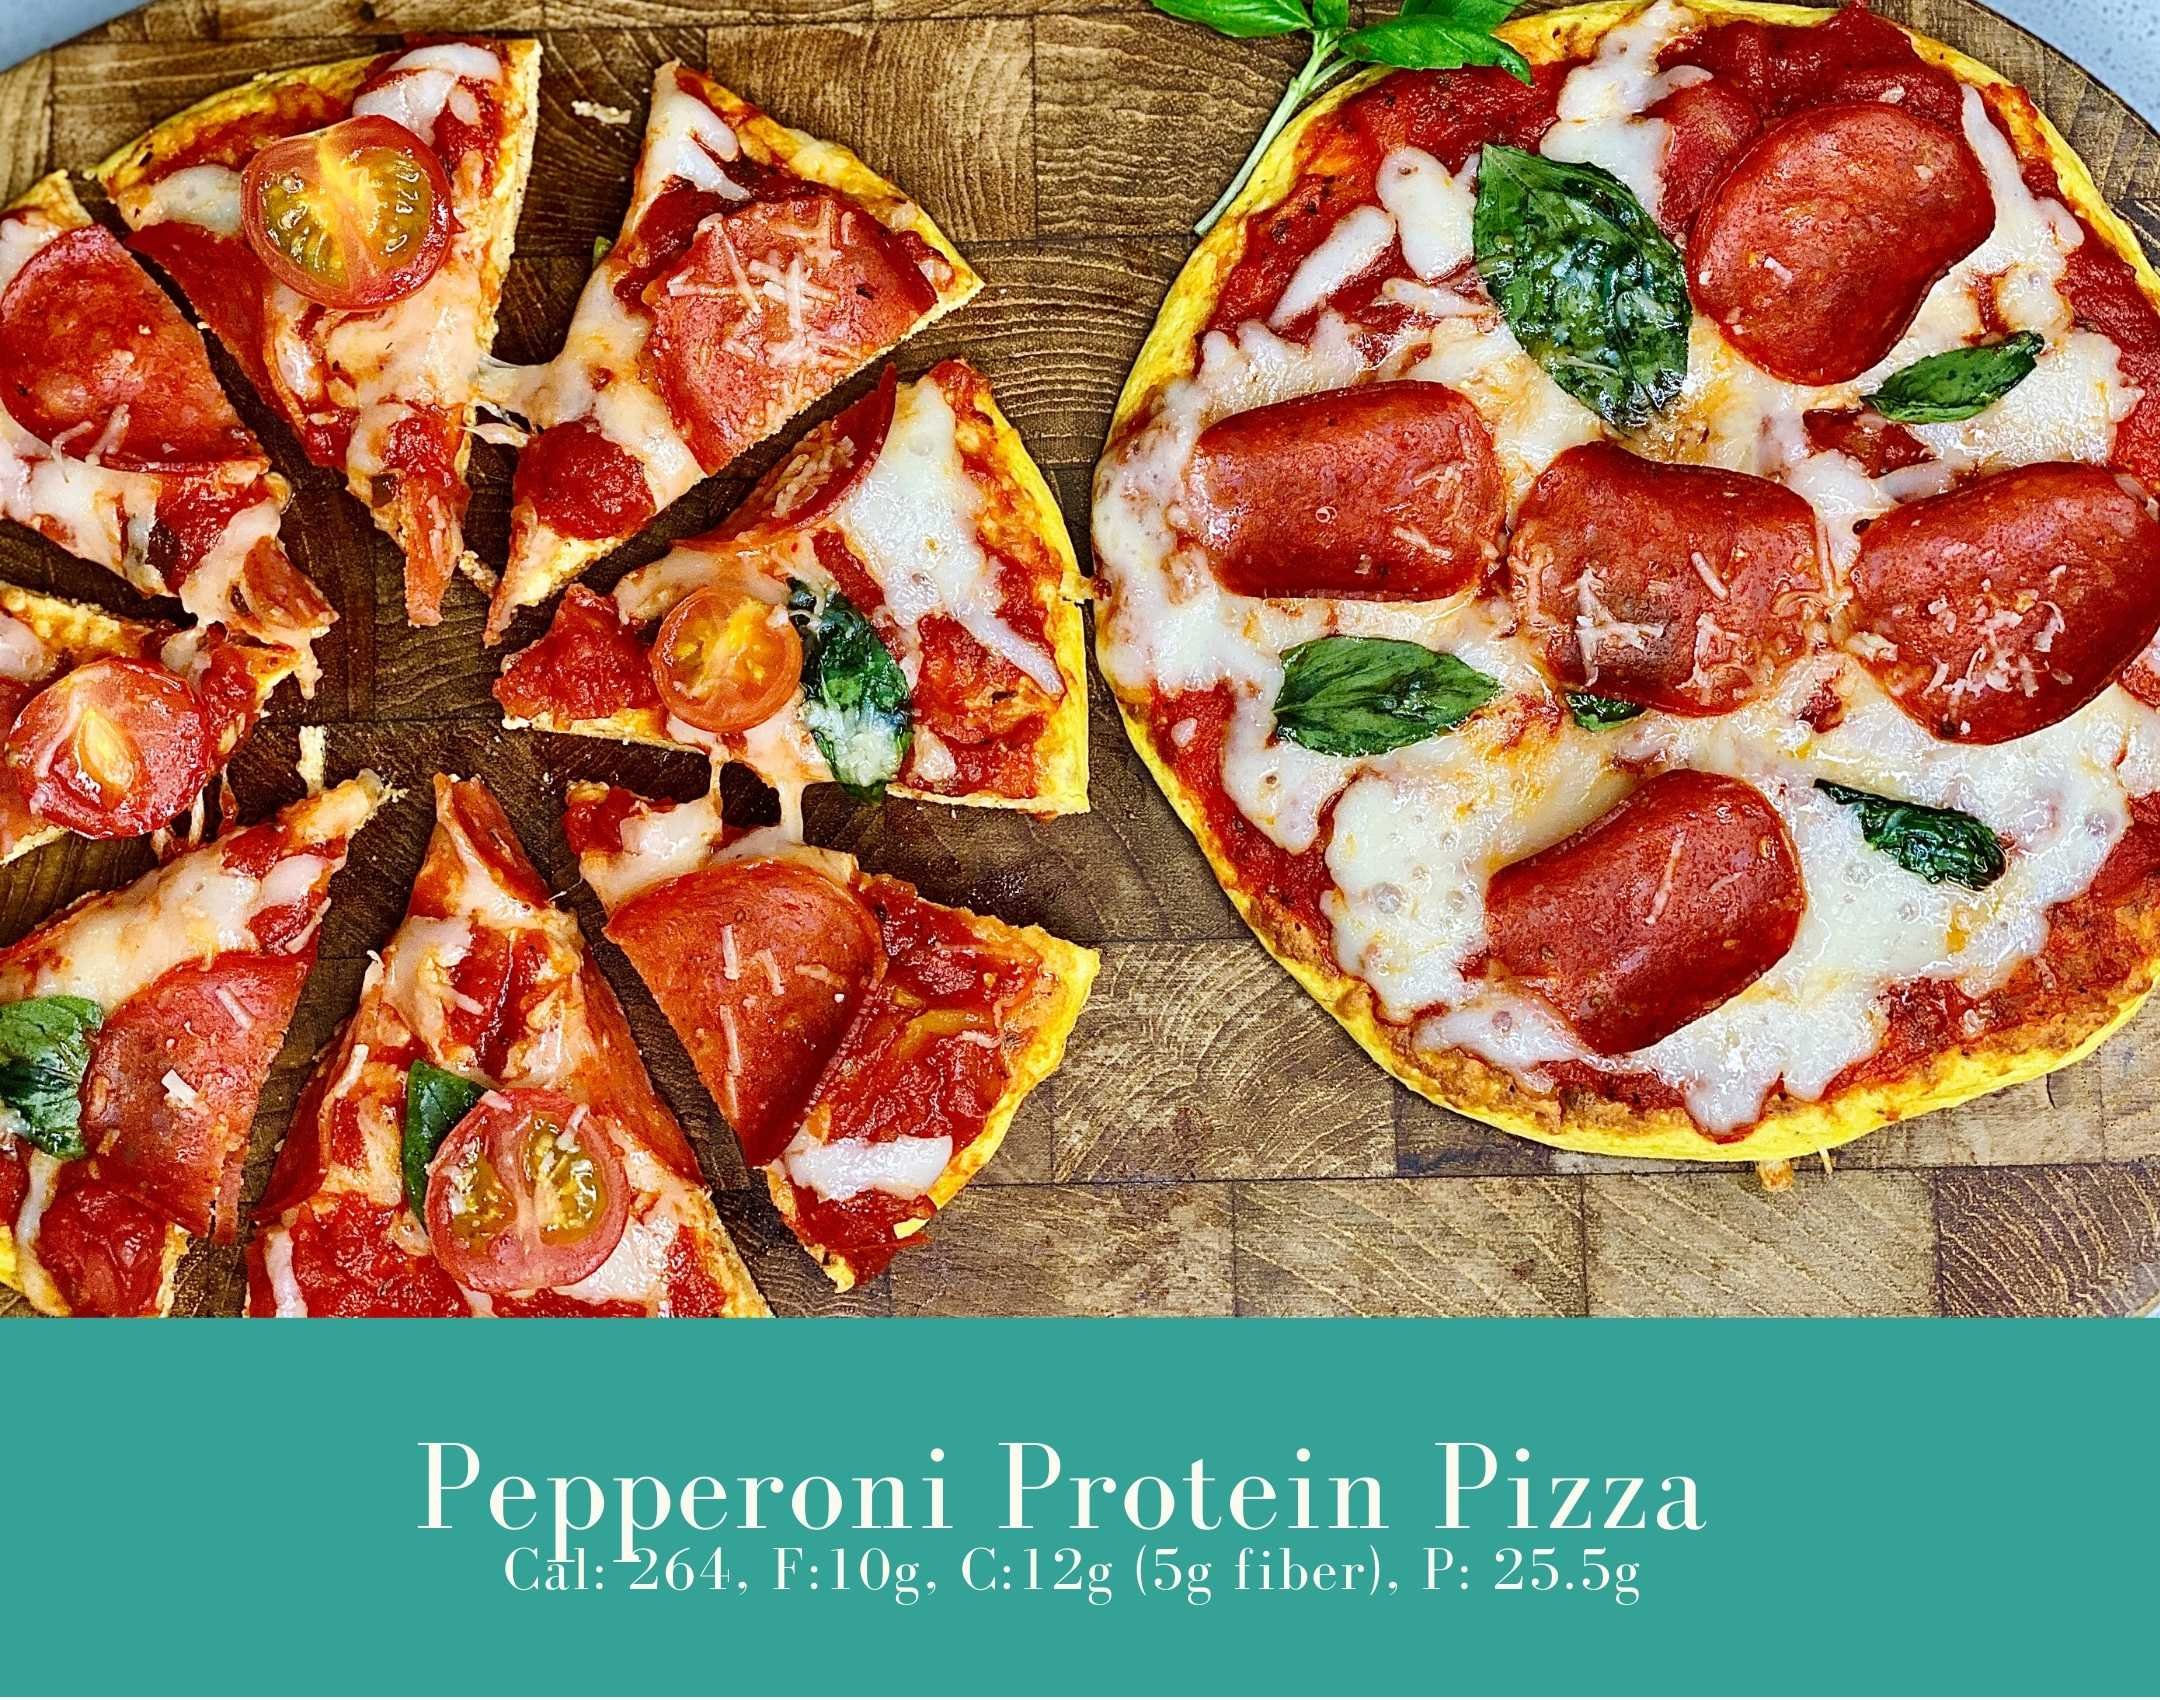 Pepperoni Protein Pizza.jpg